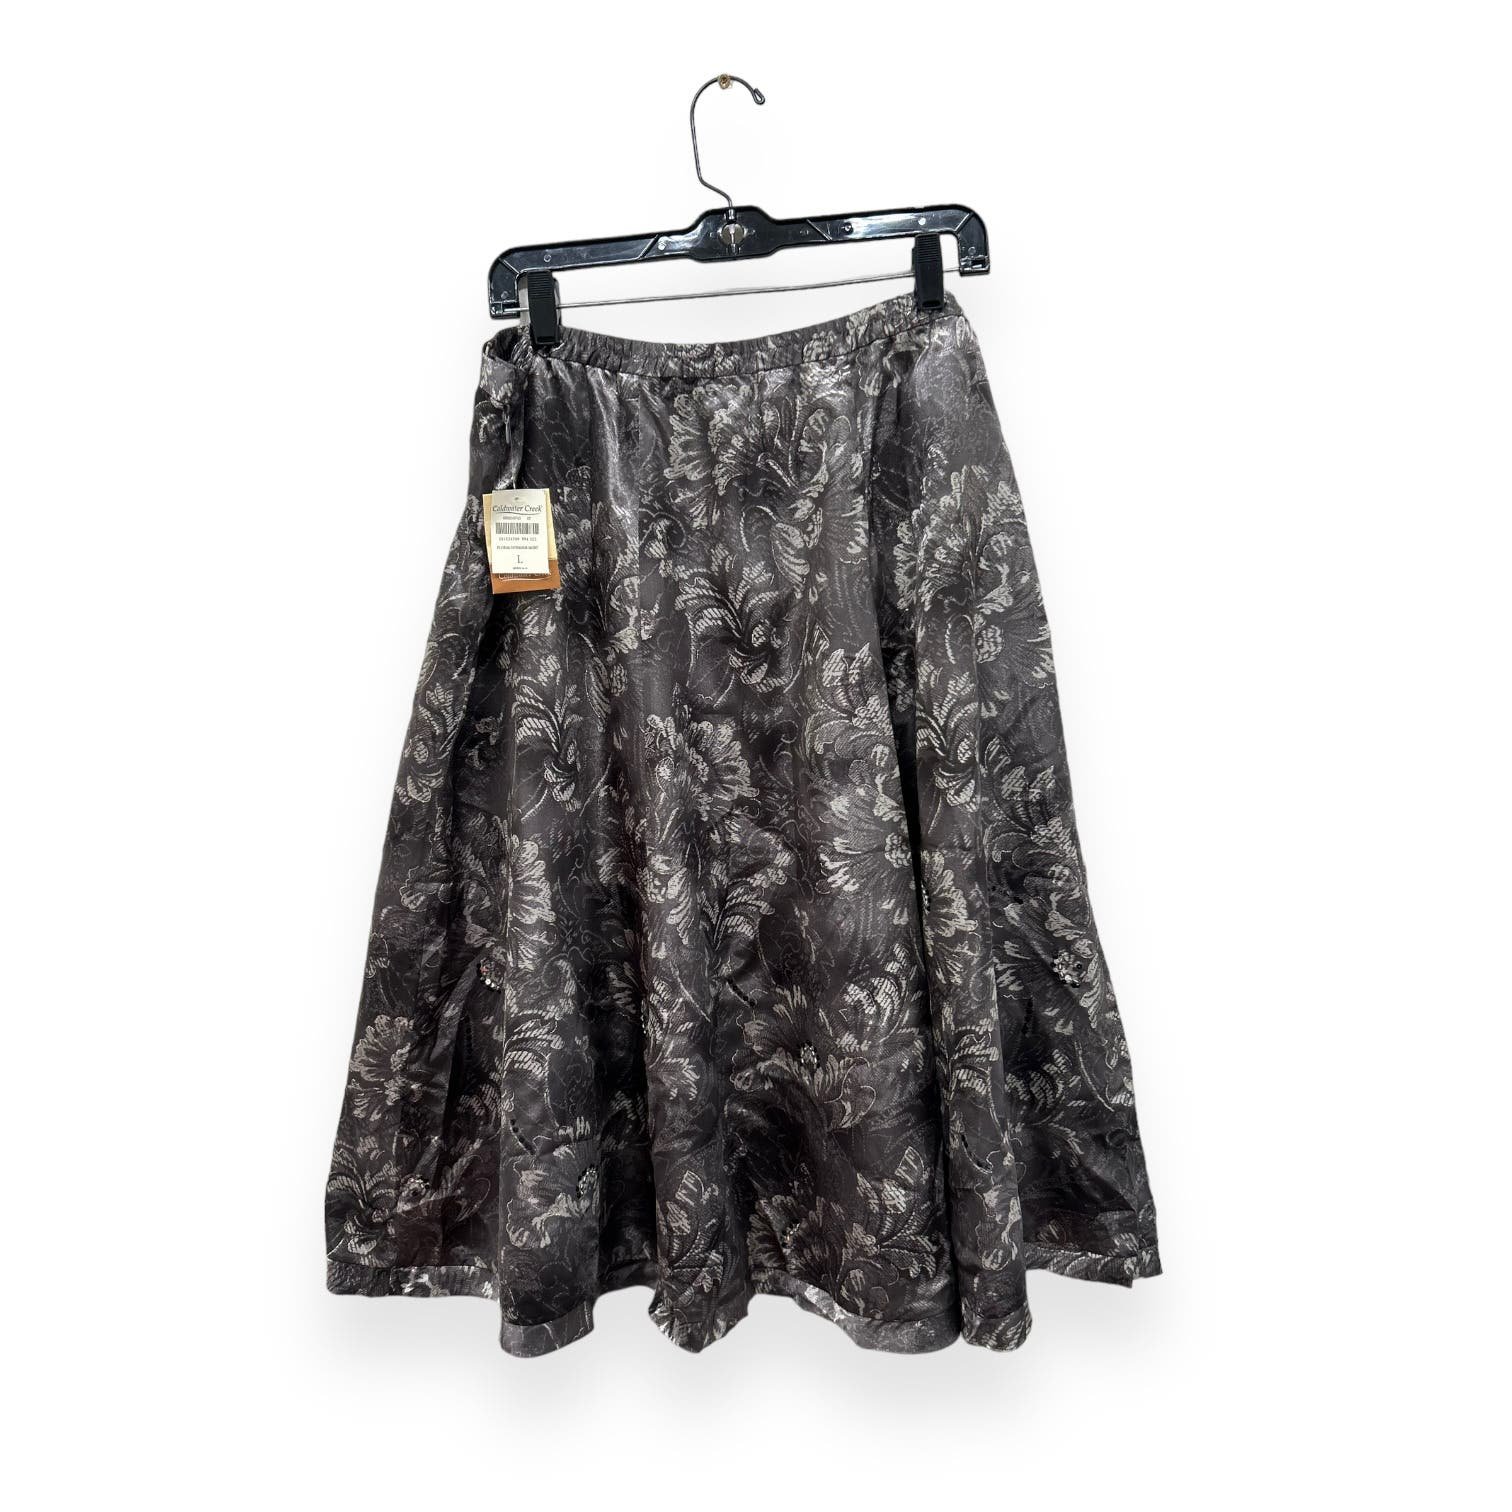 good price NWT Coldwater Creek Floral Shimmer Midi Skirt Size Medium kf5kDowxO online store